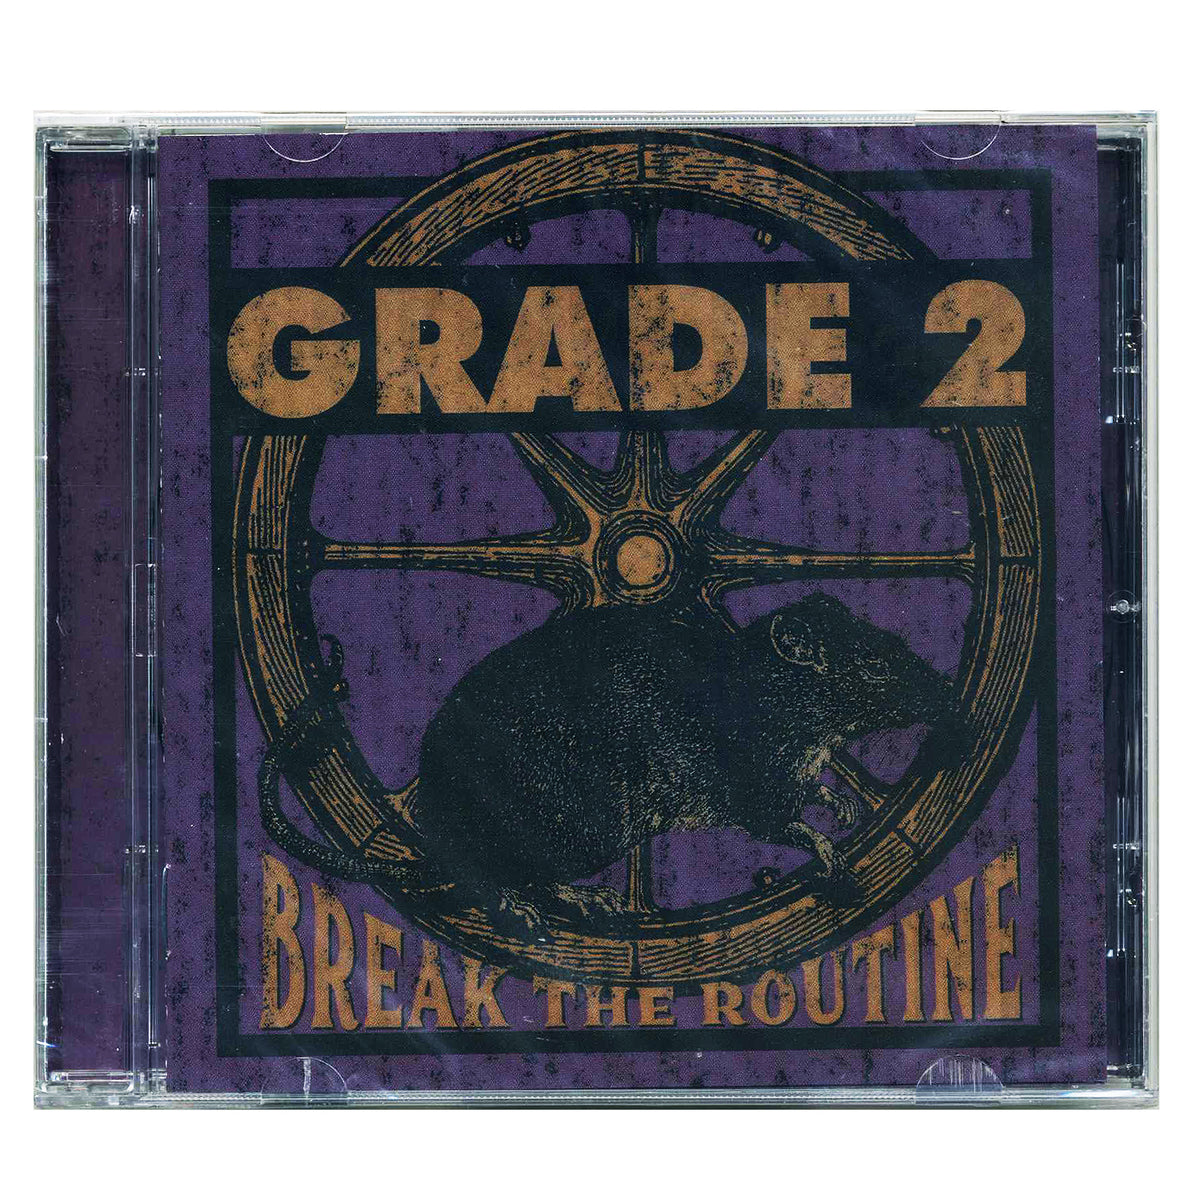 Grade 2 - Break the Routine CD